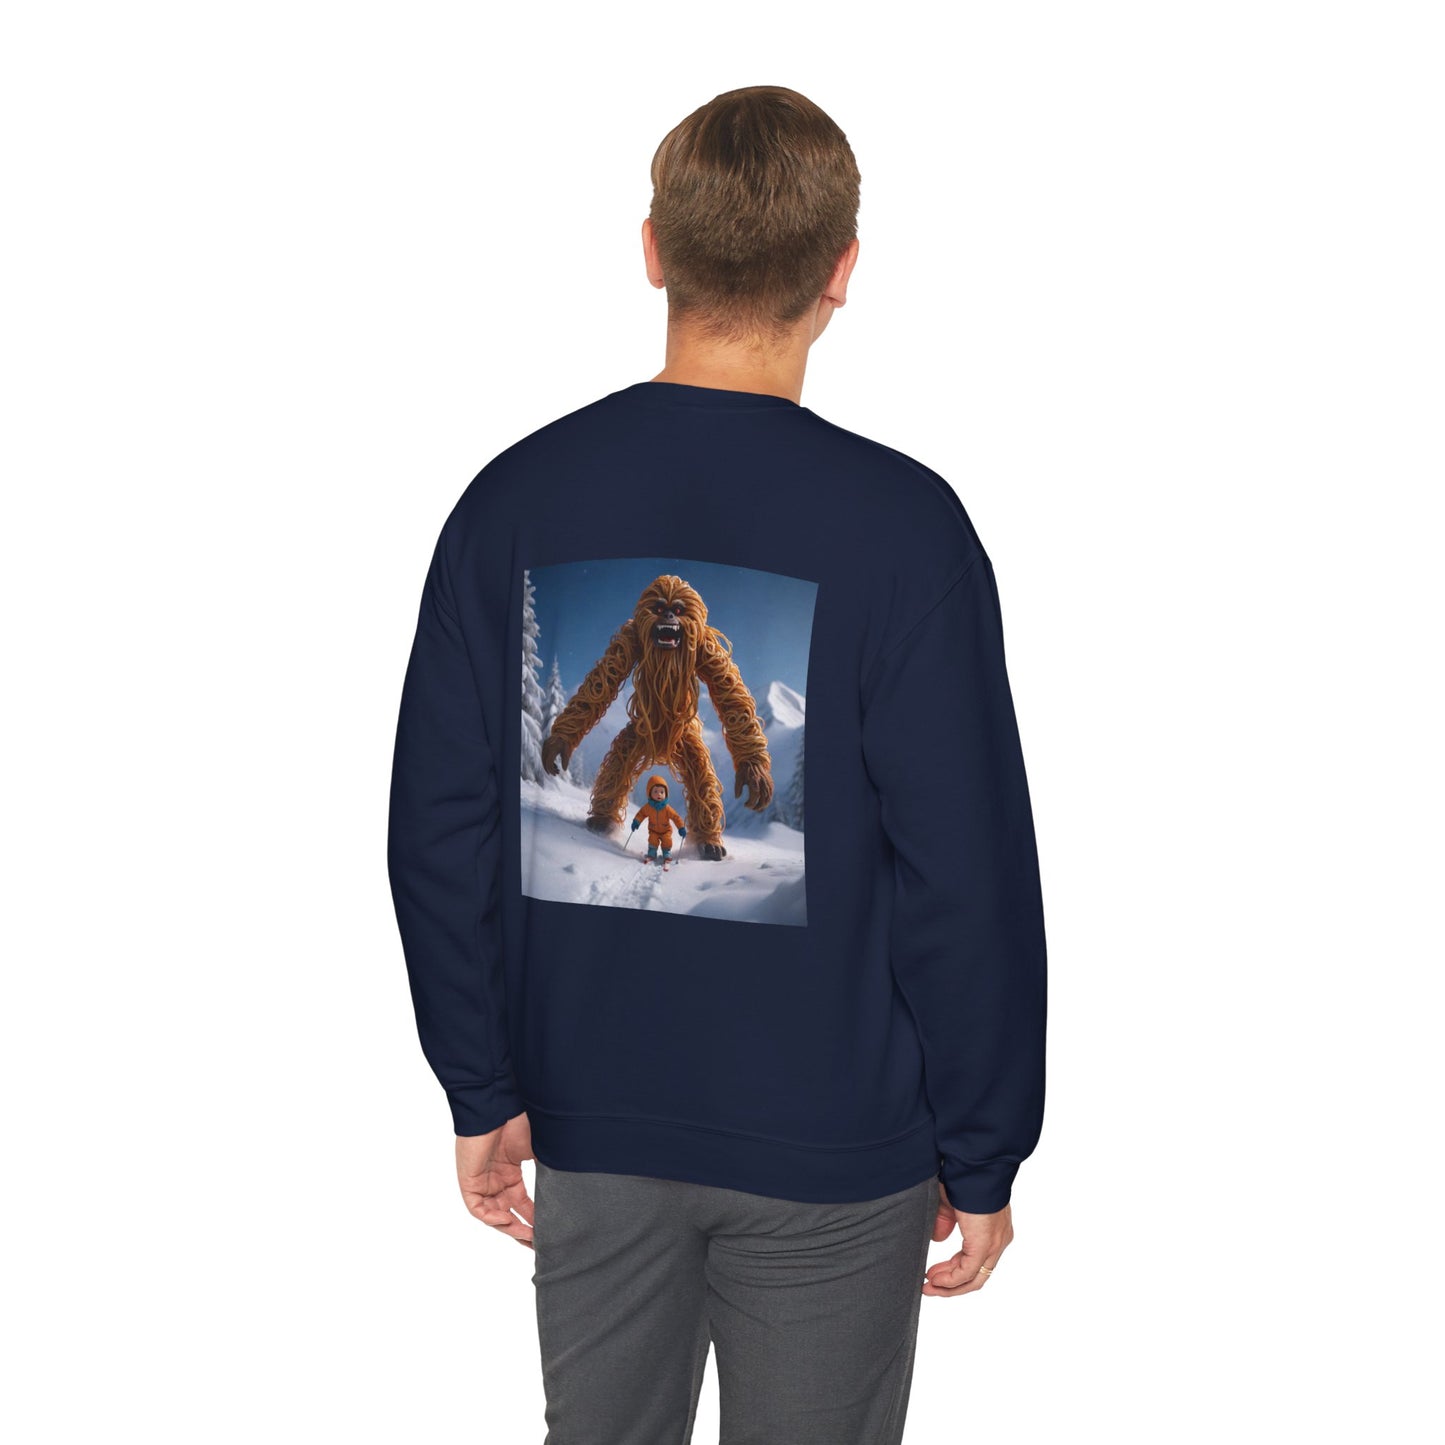 Wandering Prophet Spag-yeti sweatshirt